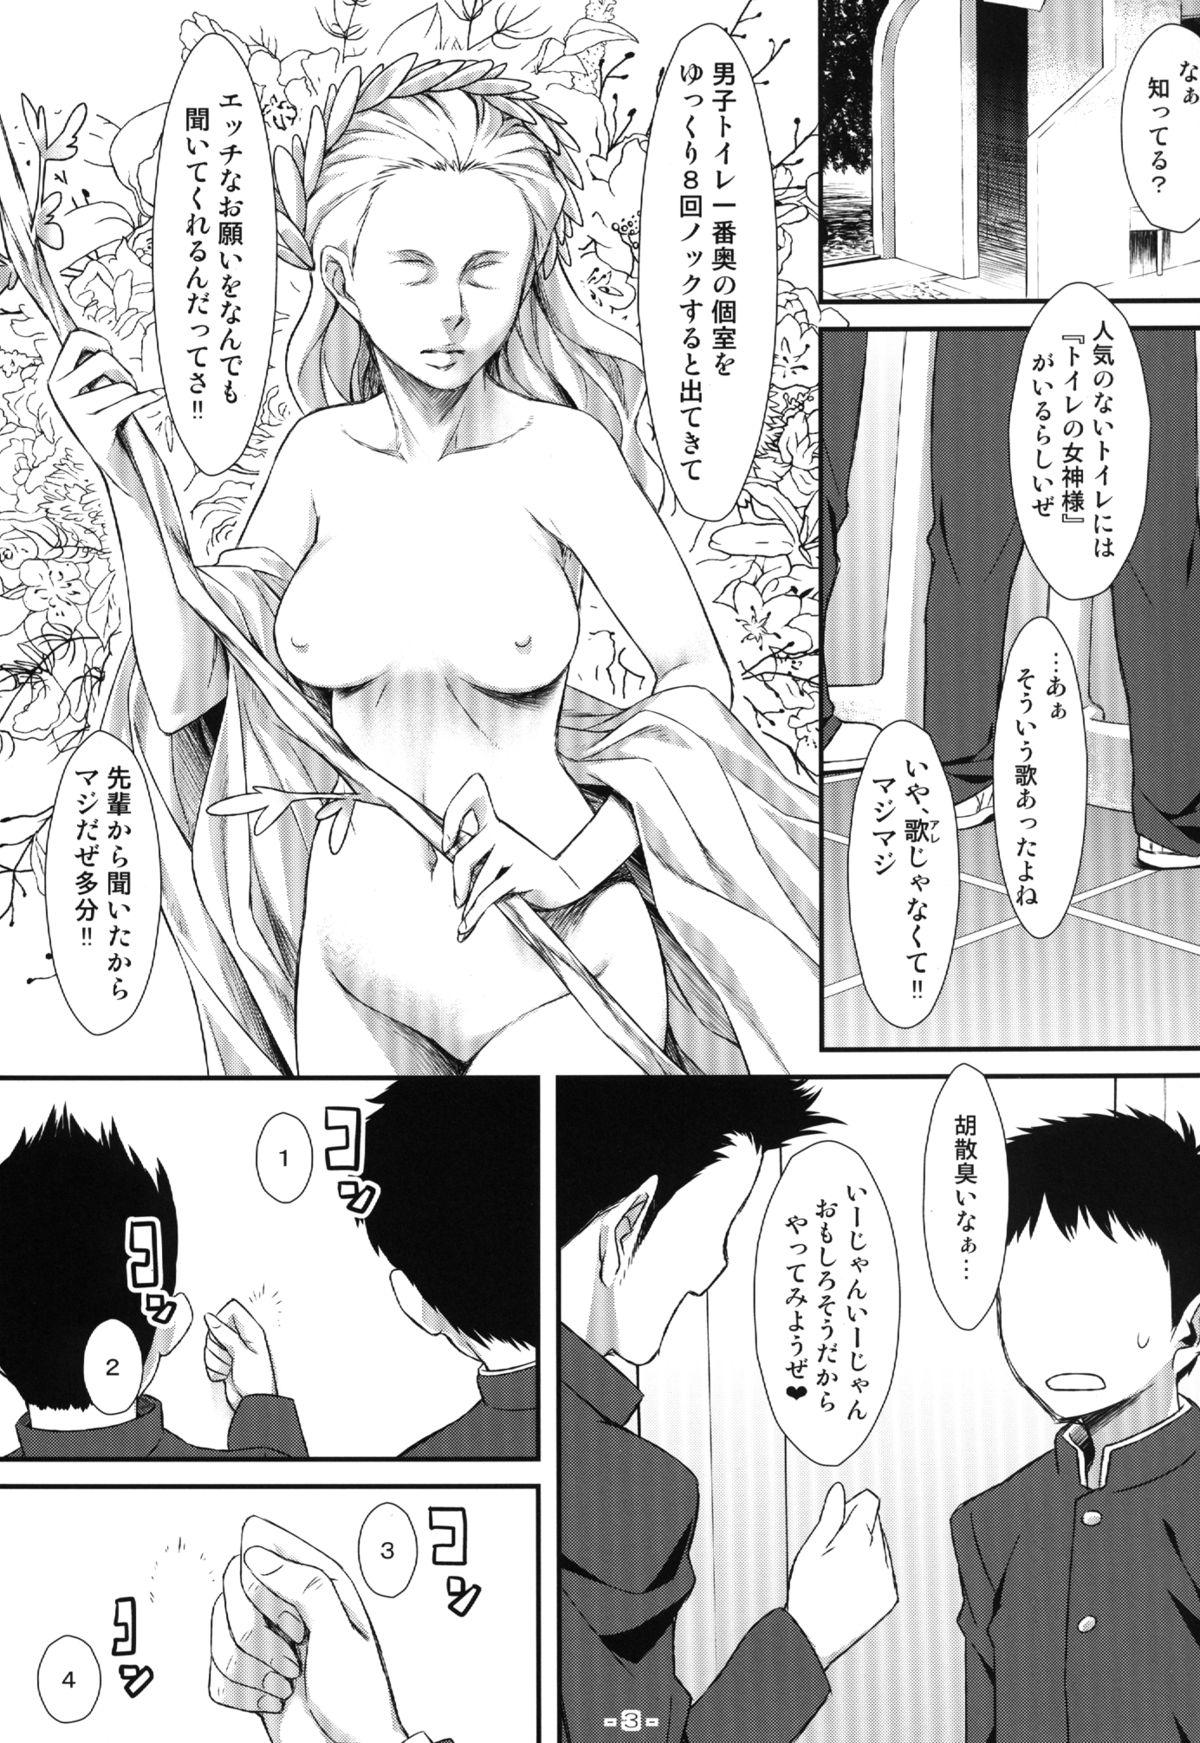 Realsex Yasei no Chijo ga Arawareta! 7 - Touhou project Nudity - Page 3